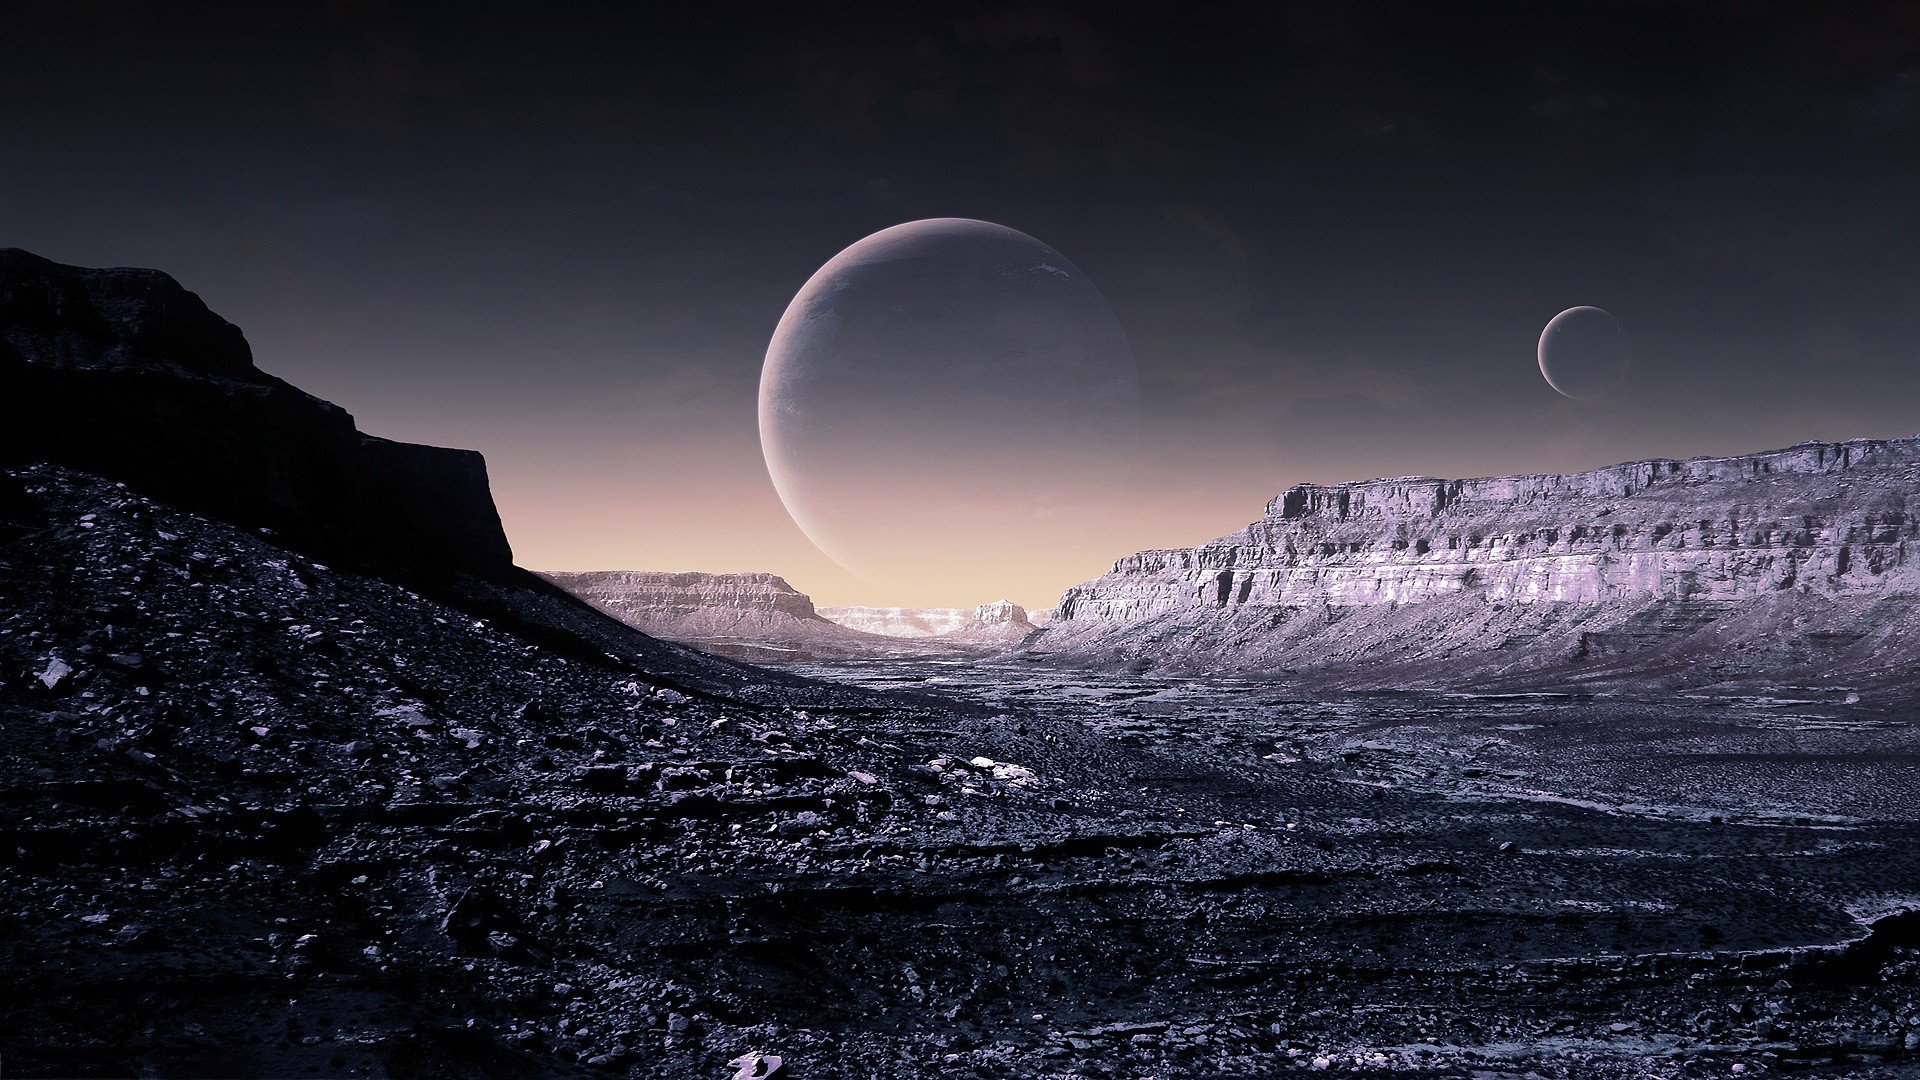  planets surface spacescape science fiction wallpaper background